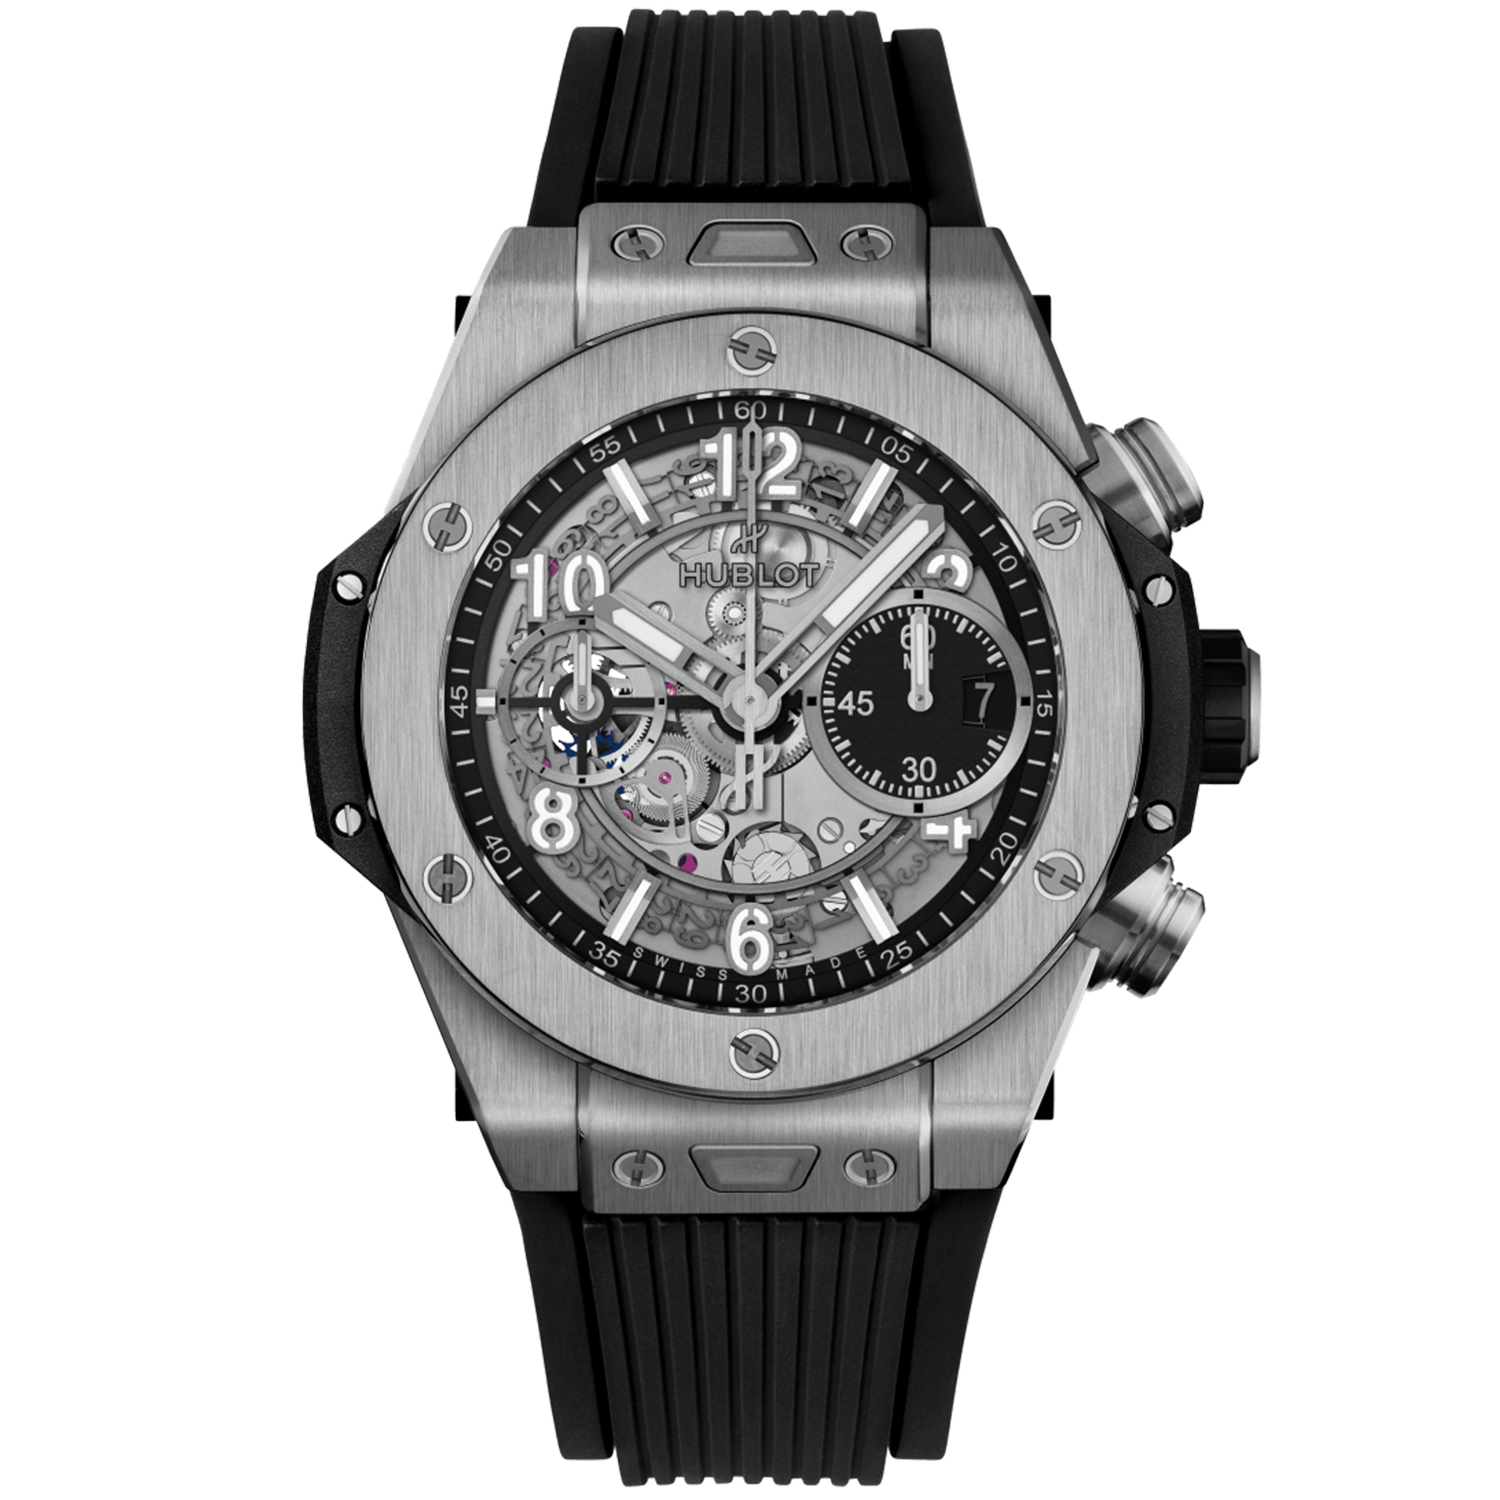 Big Bang Unico 42mm Titanium Automatic Chronograph Watch